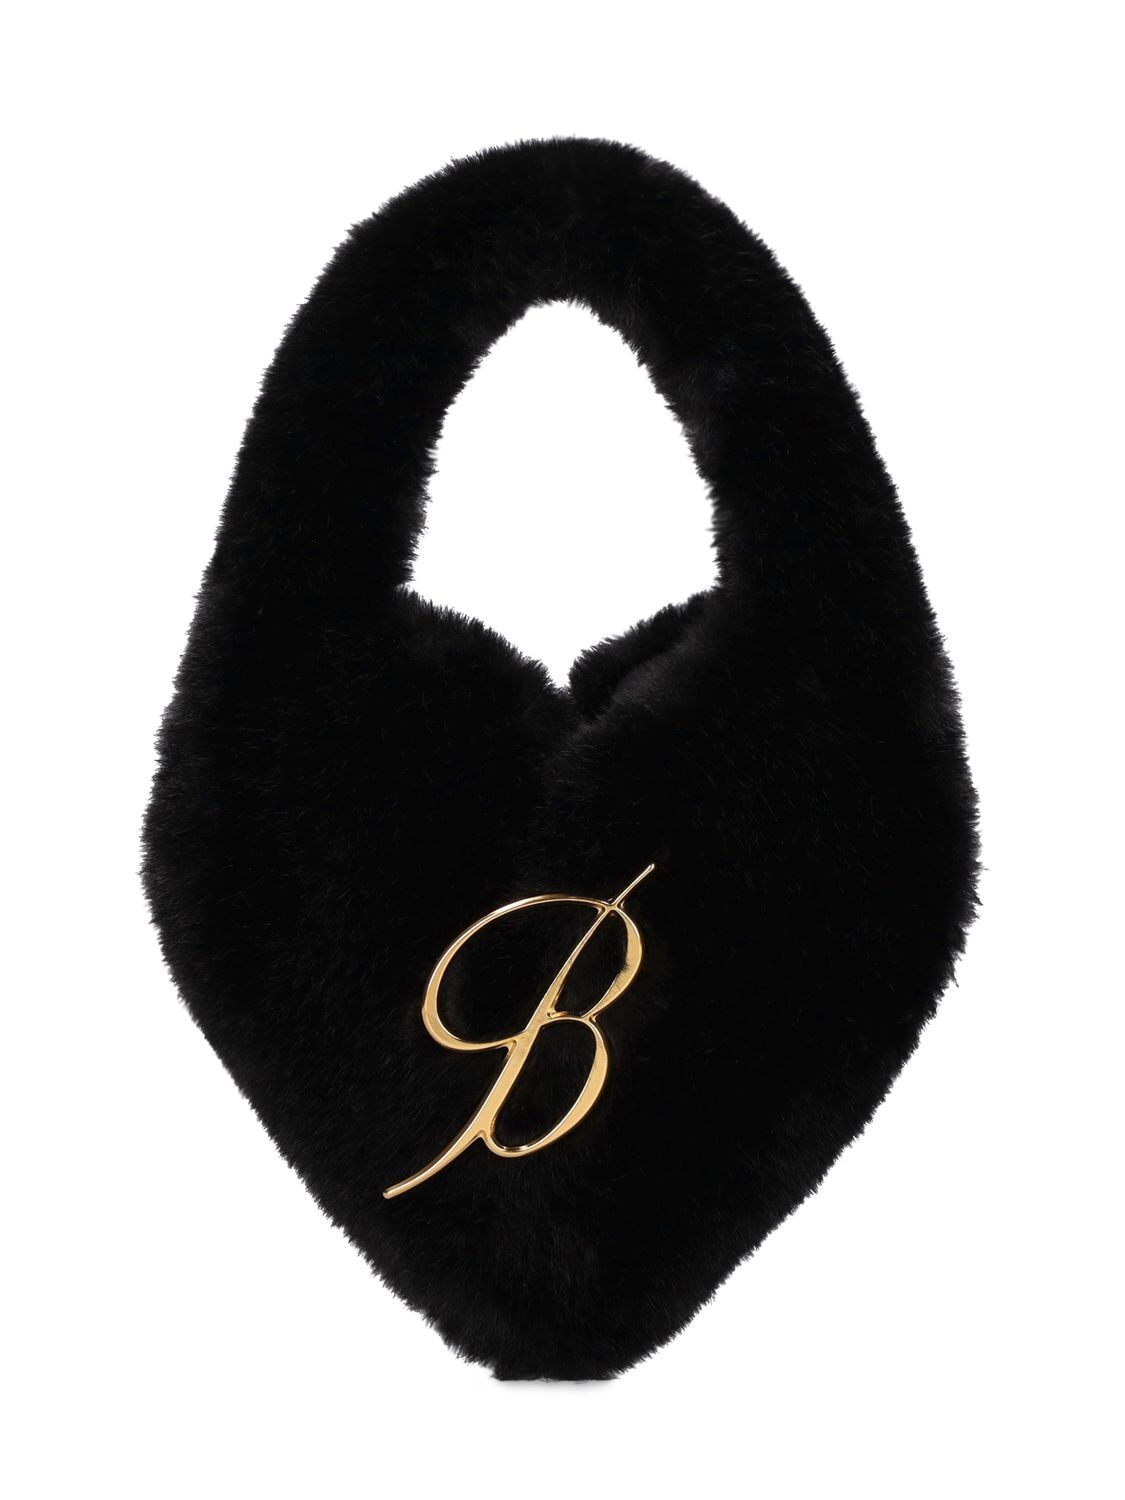 BLUMARINE Logo Heart Faux Fur Top Handle Bag in black